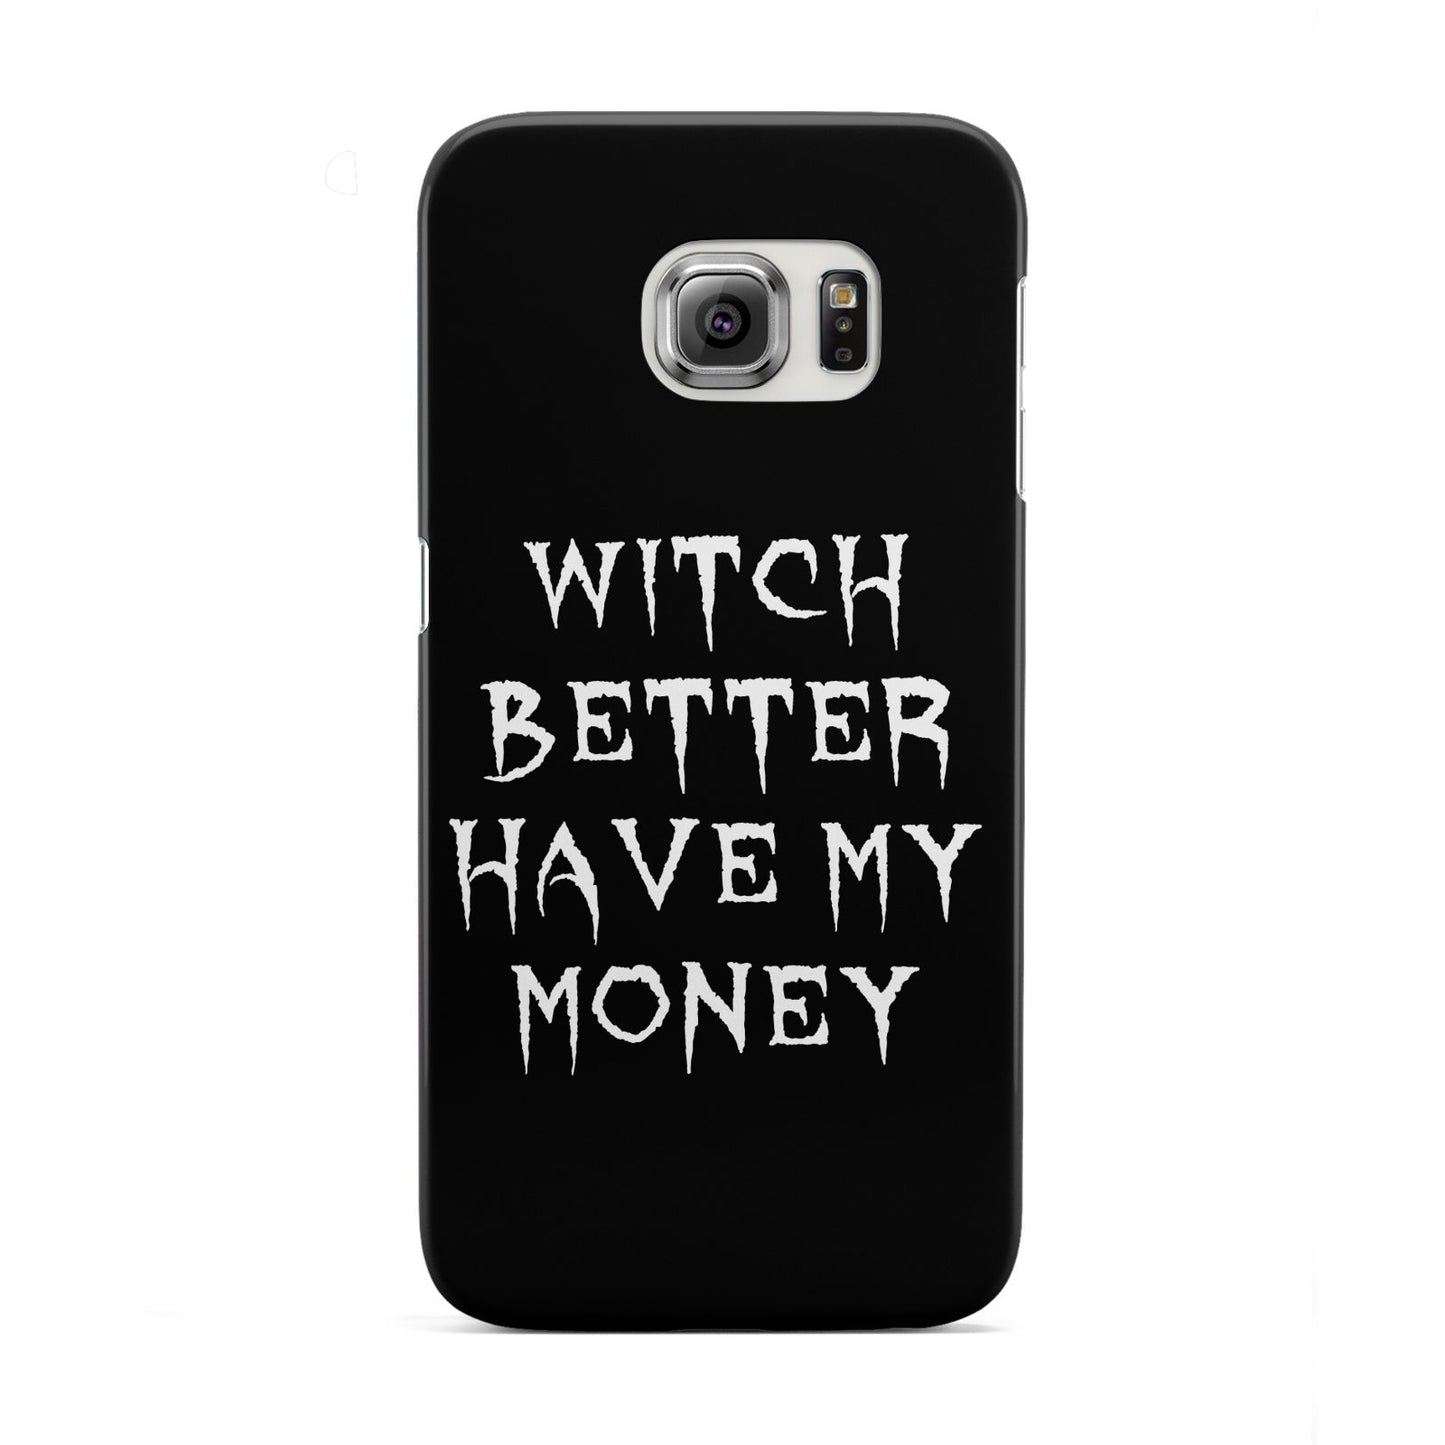 Witch Better Have My Money Samsung Galaxy S6 Edge Case